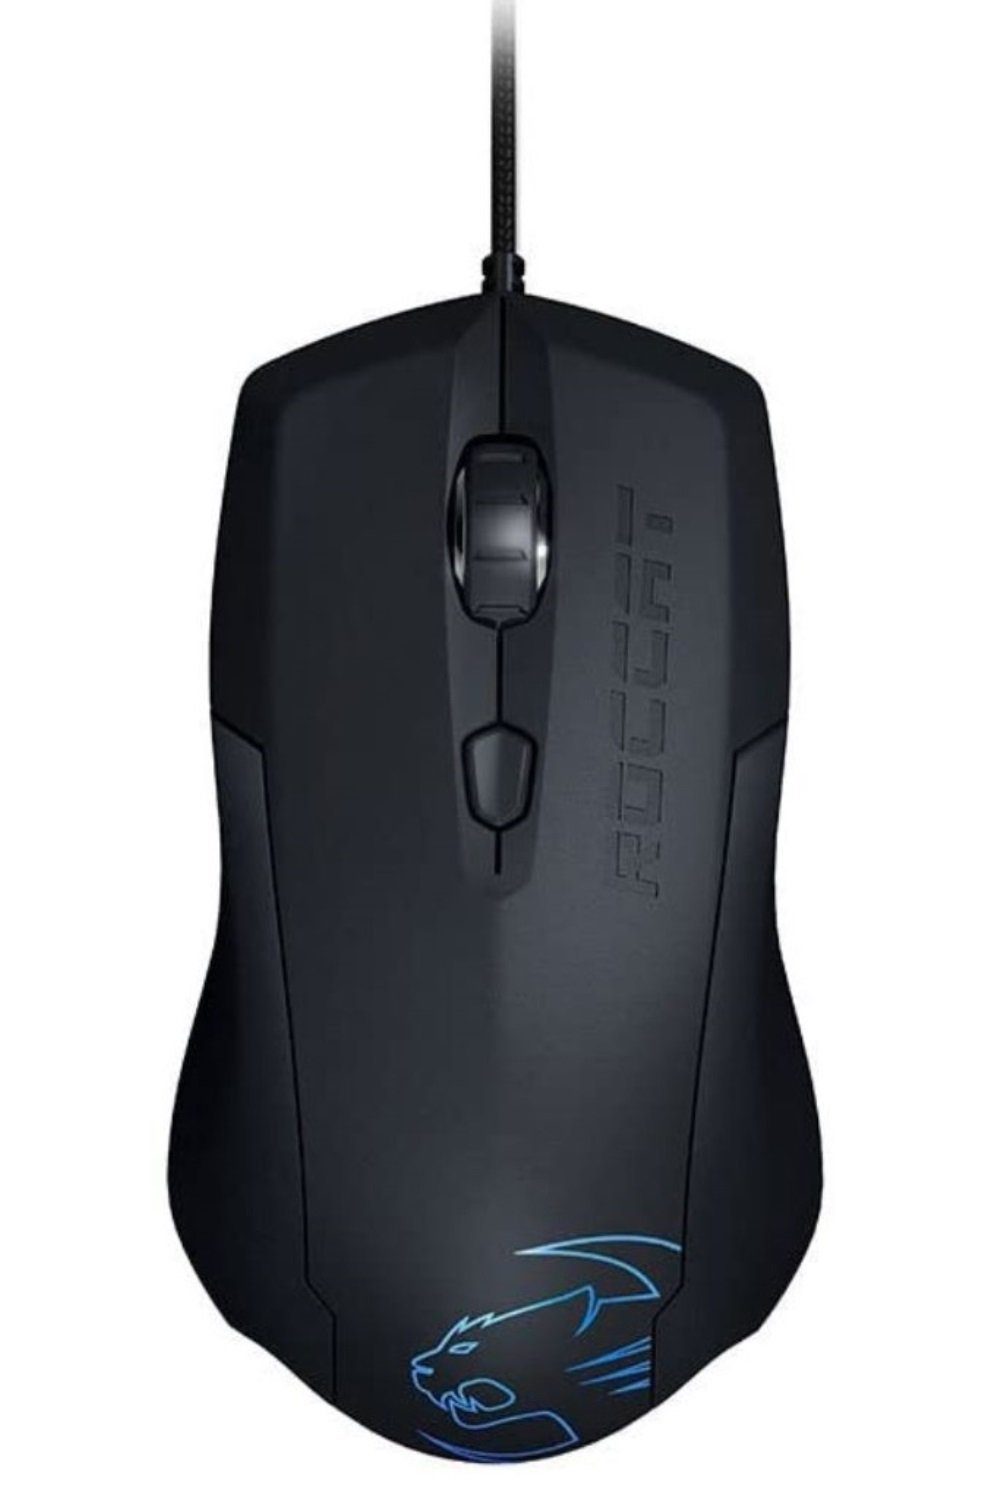 ROCCAT Set Lua Tri-Button DPI Bundle) Gamer + (Maus-Pad Kanga Einstellbare Mouse-Pad Mäuse Gaming Mouse